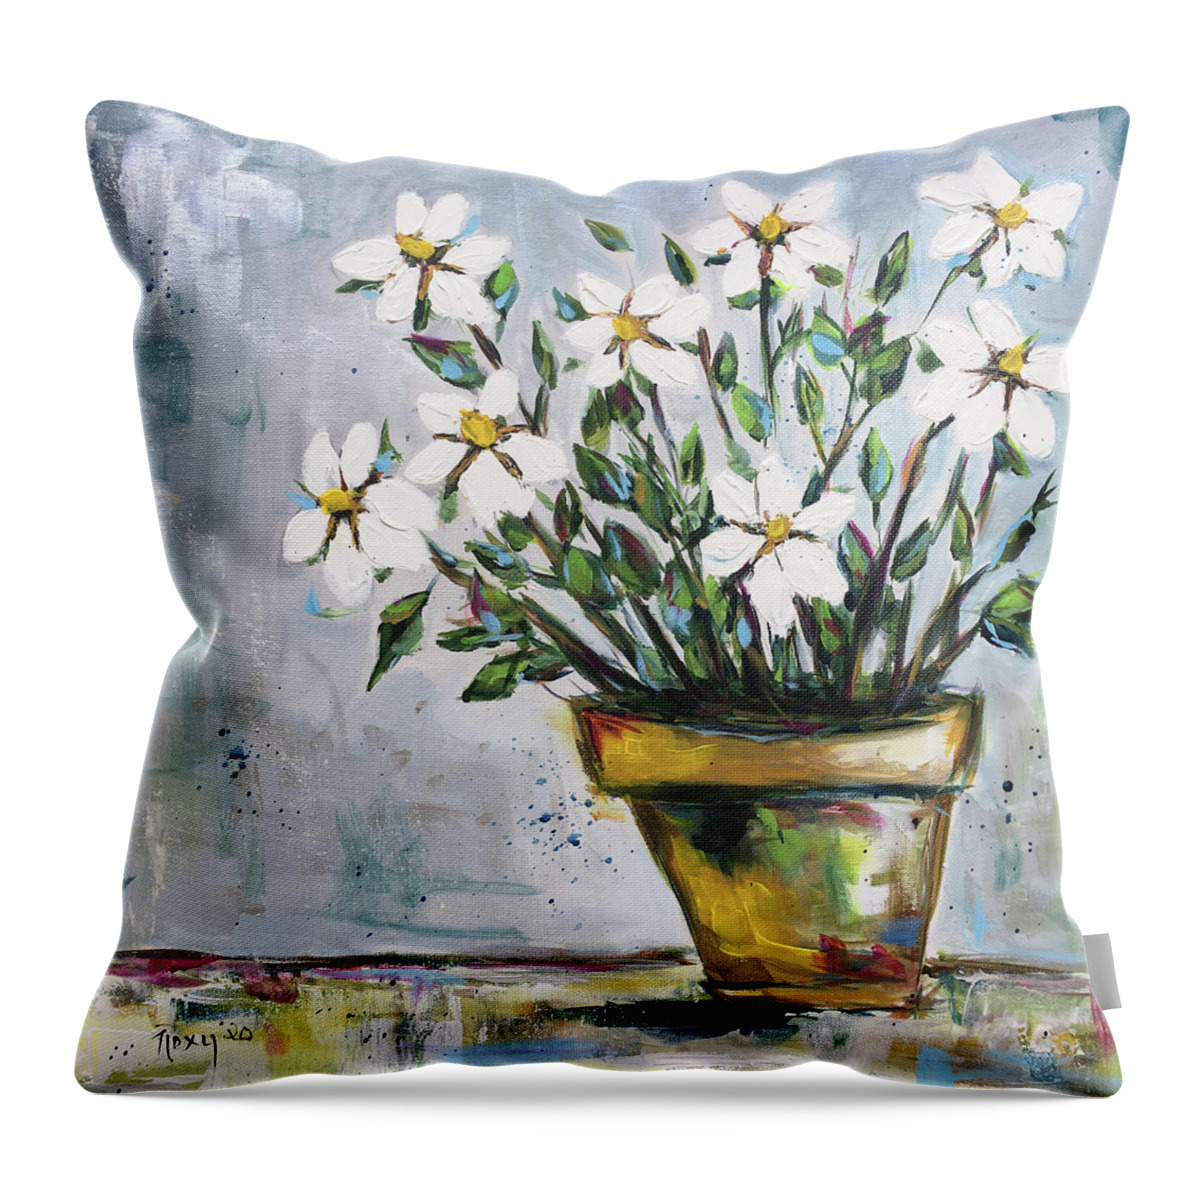 Daisy Gardenias Throw Pillow featuring the painting Daisy Gardenias by Roxy Rich